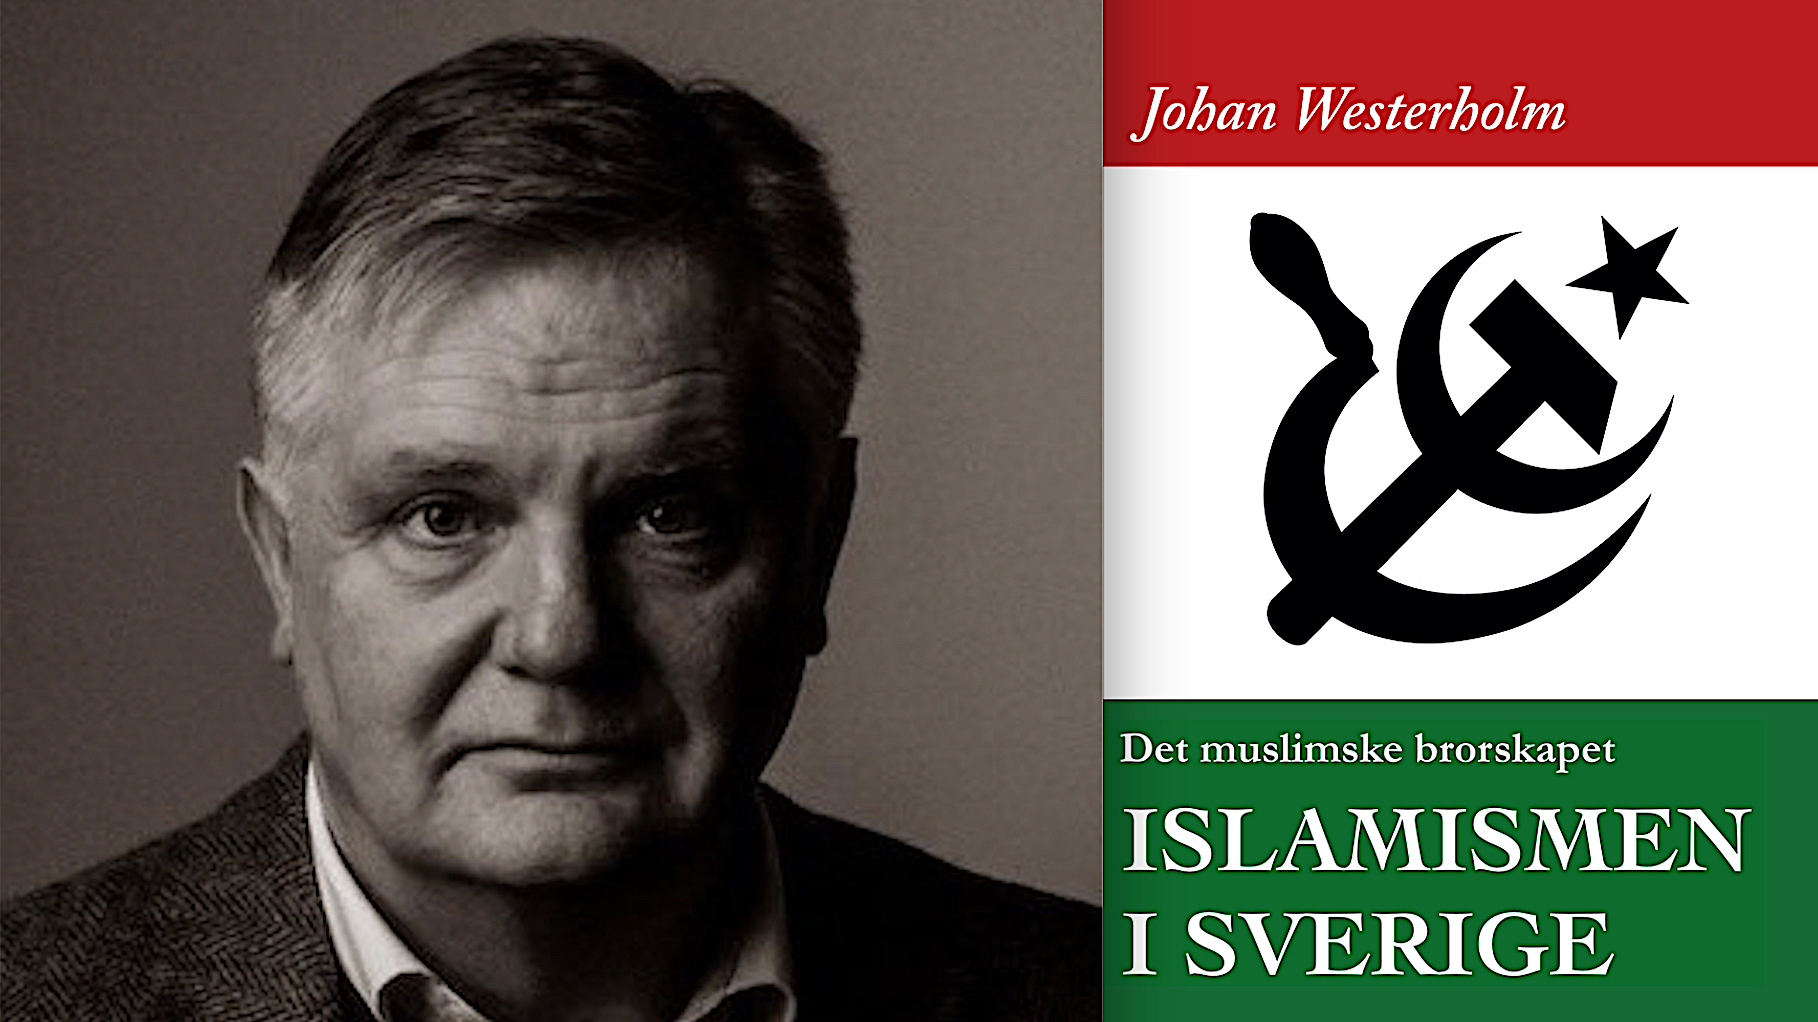 https://www.document.no/wp-content/uploads/2020/05/johan-westerholm-islamismen-i-sverige.jpg